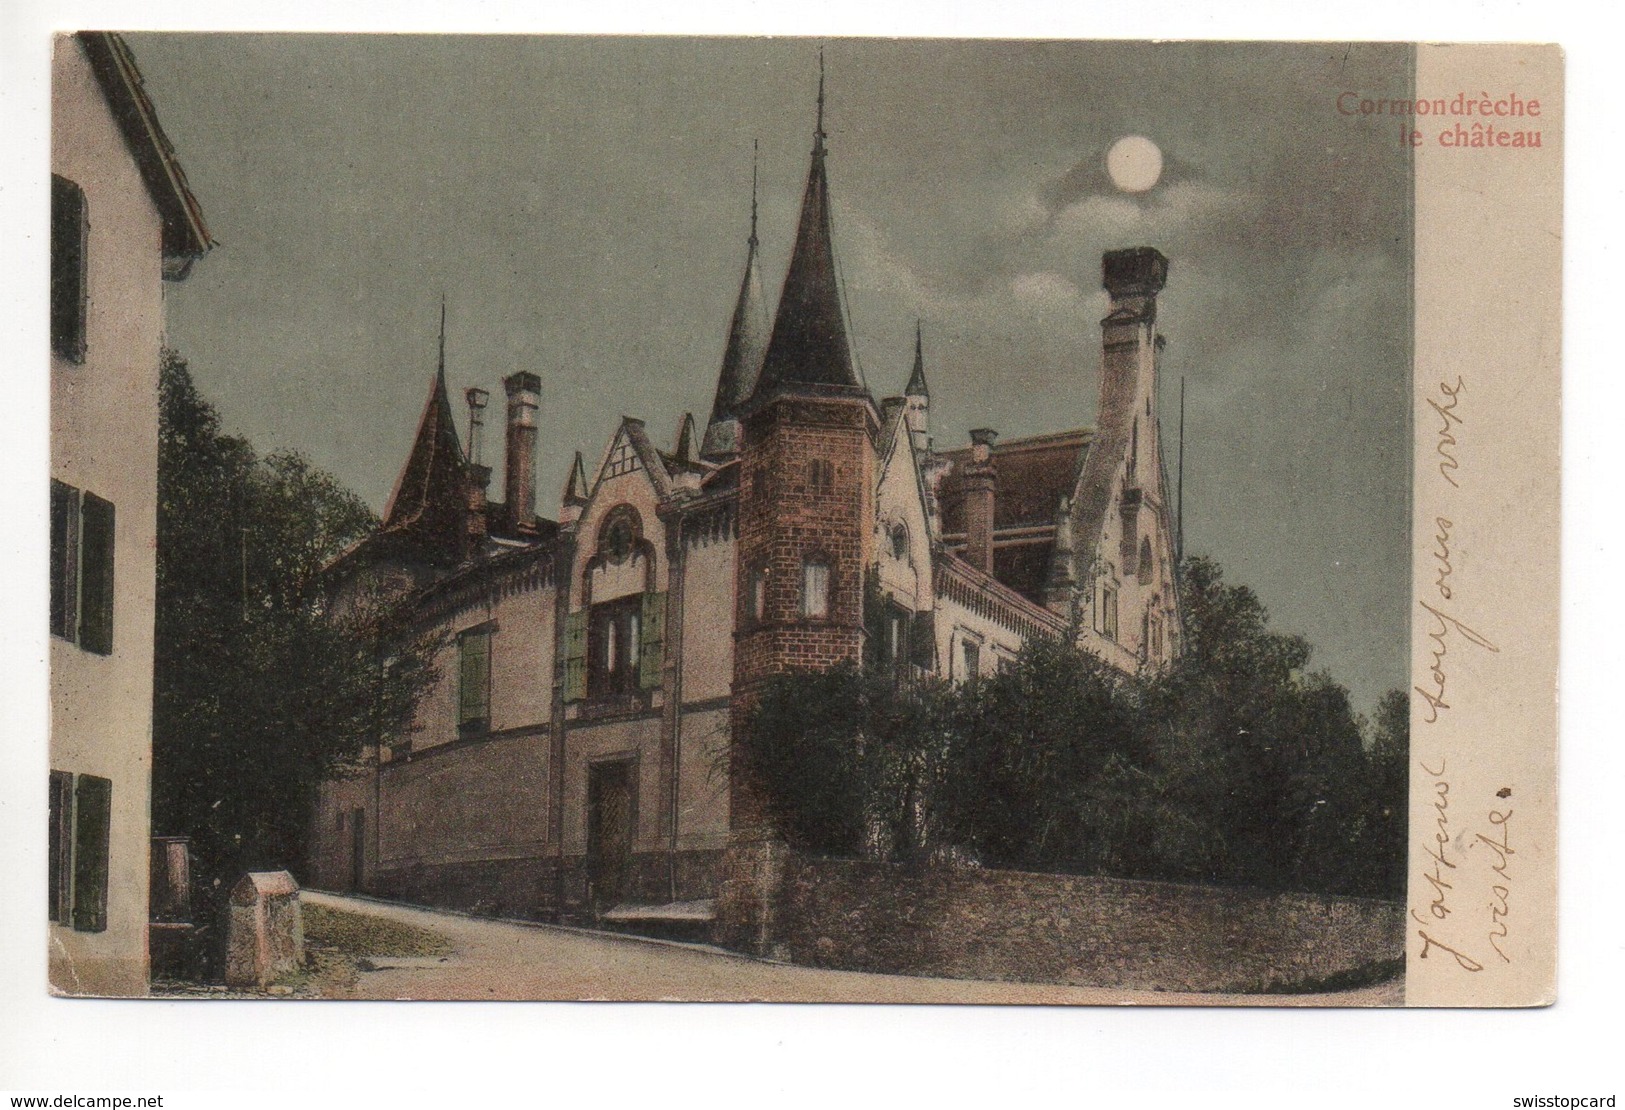 CORMONDRÈCHE Le Château Mondschein - Cormondrèche